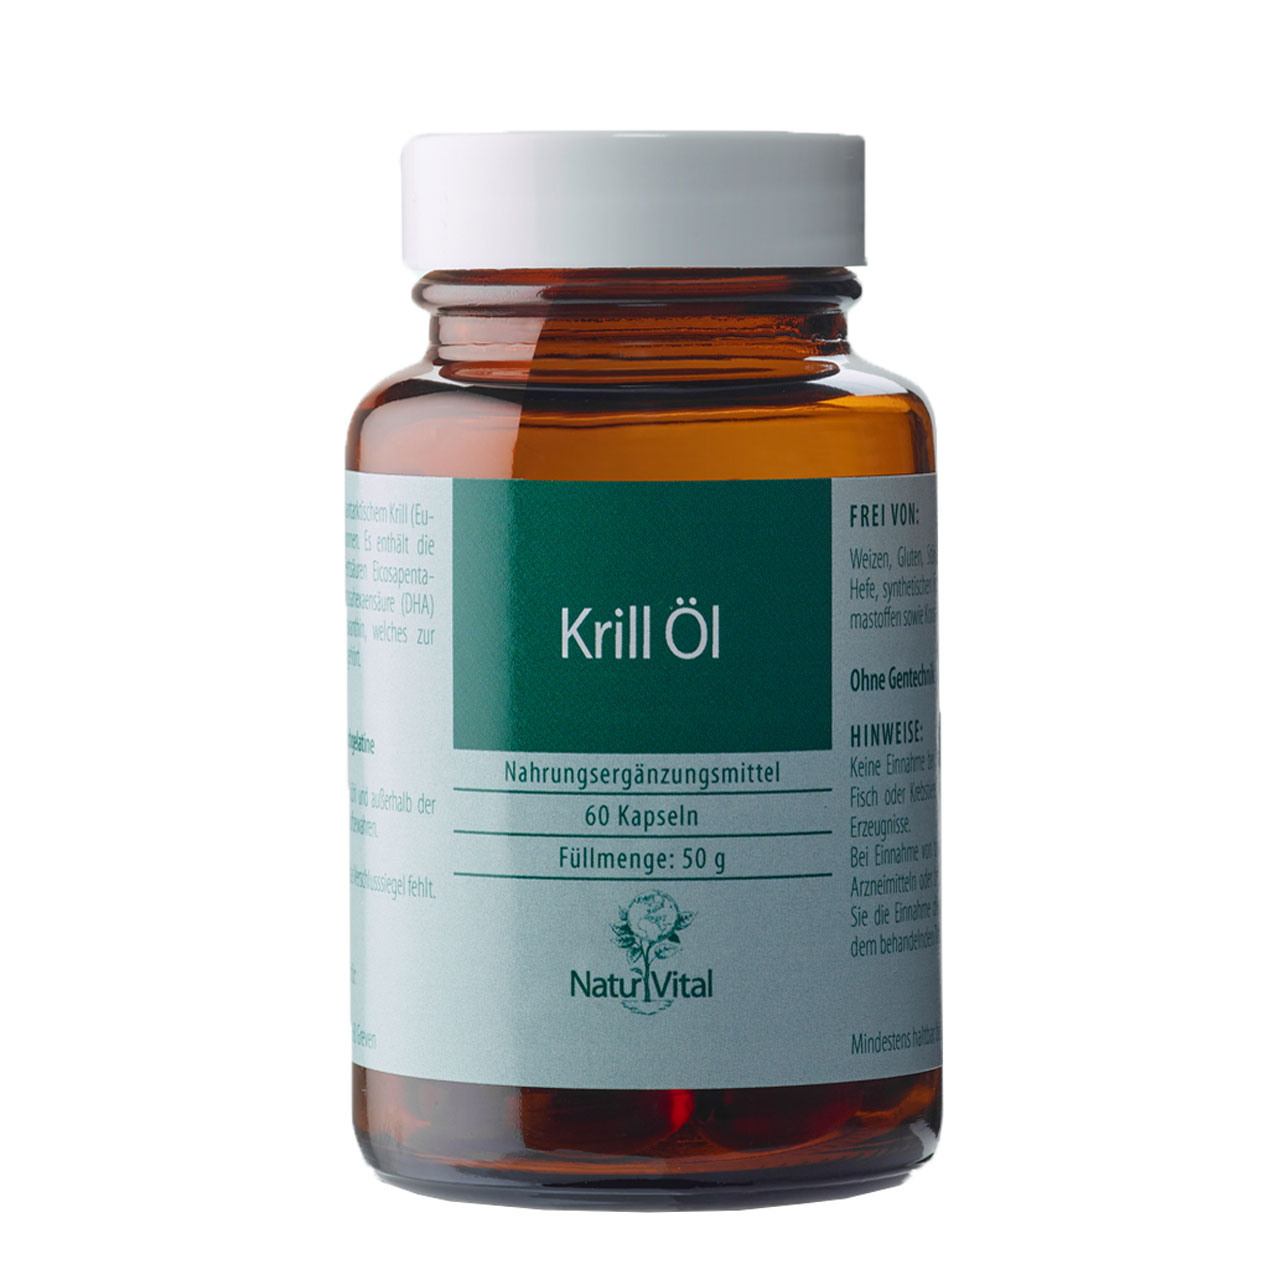 Krill Öl von Natur Vital beinhaltet 60 Kapseln